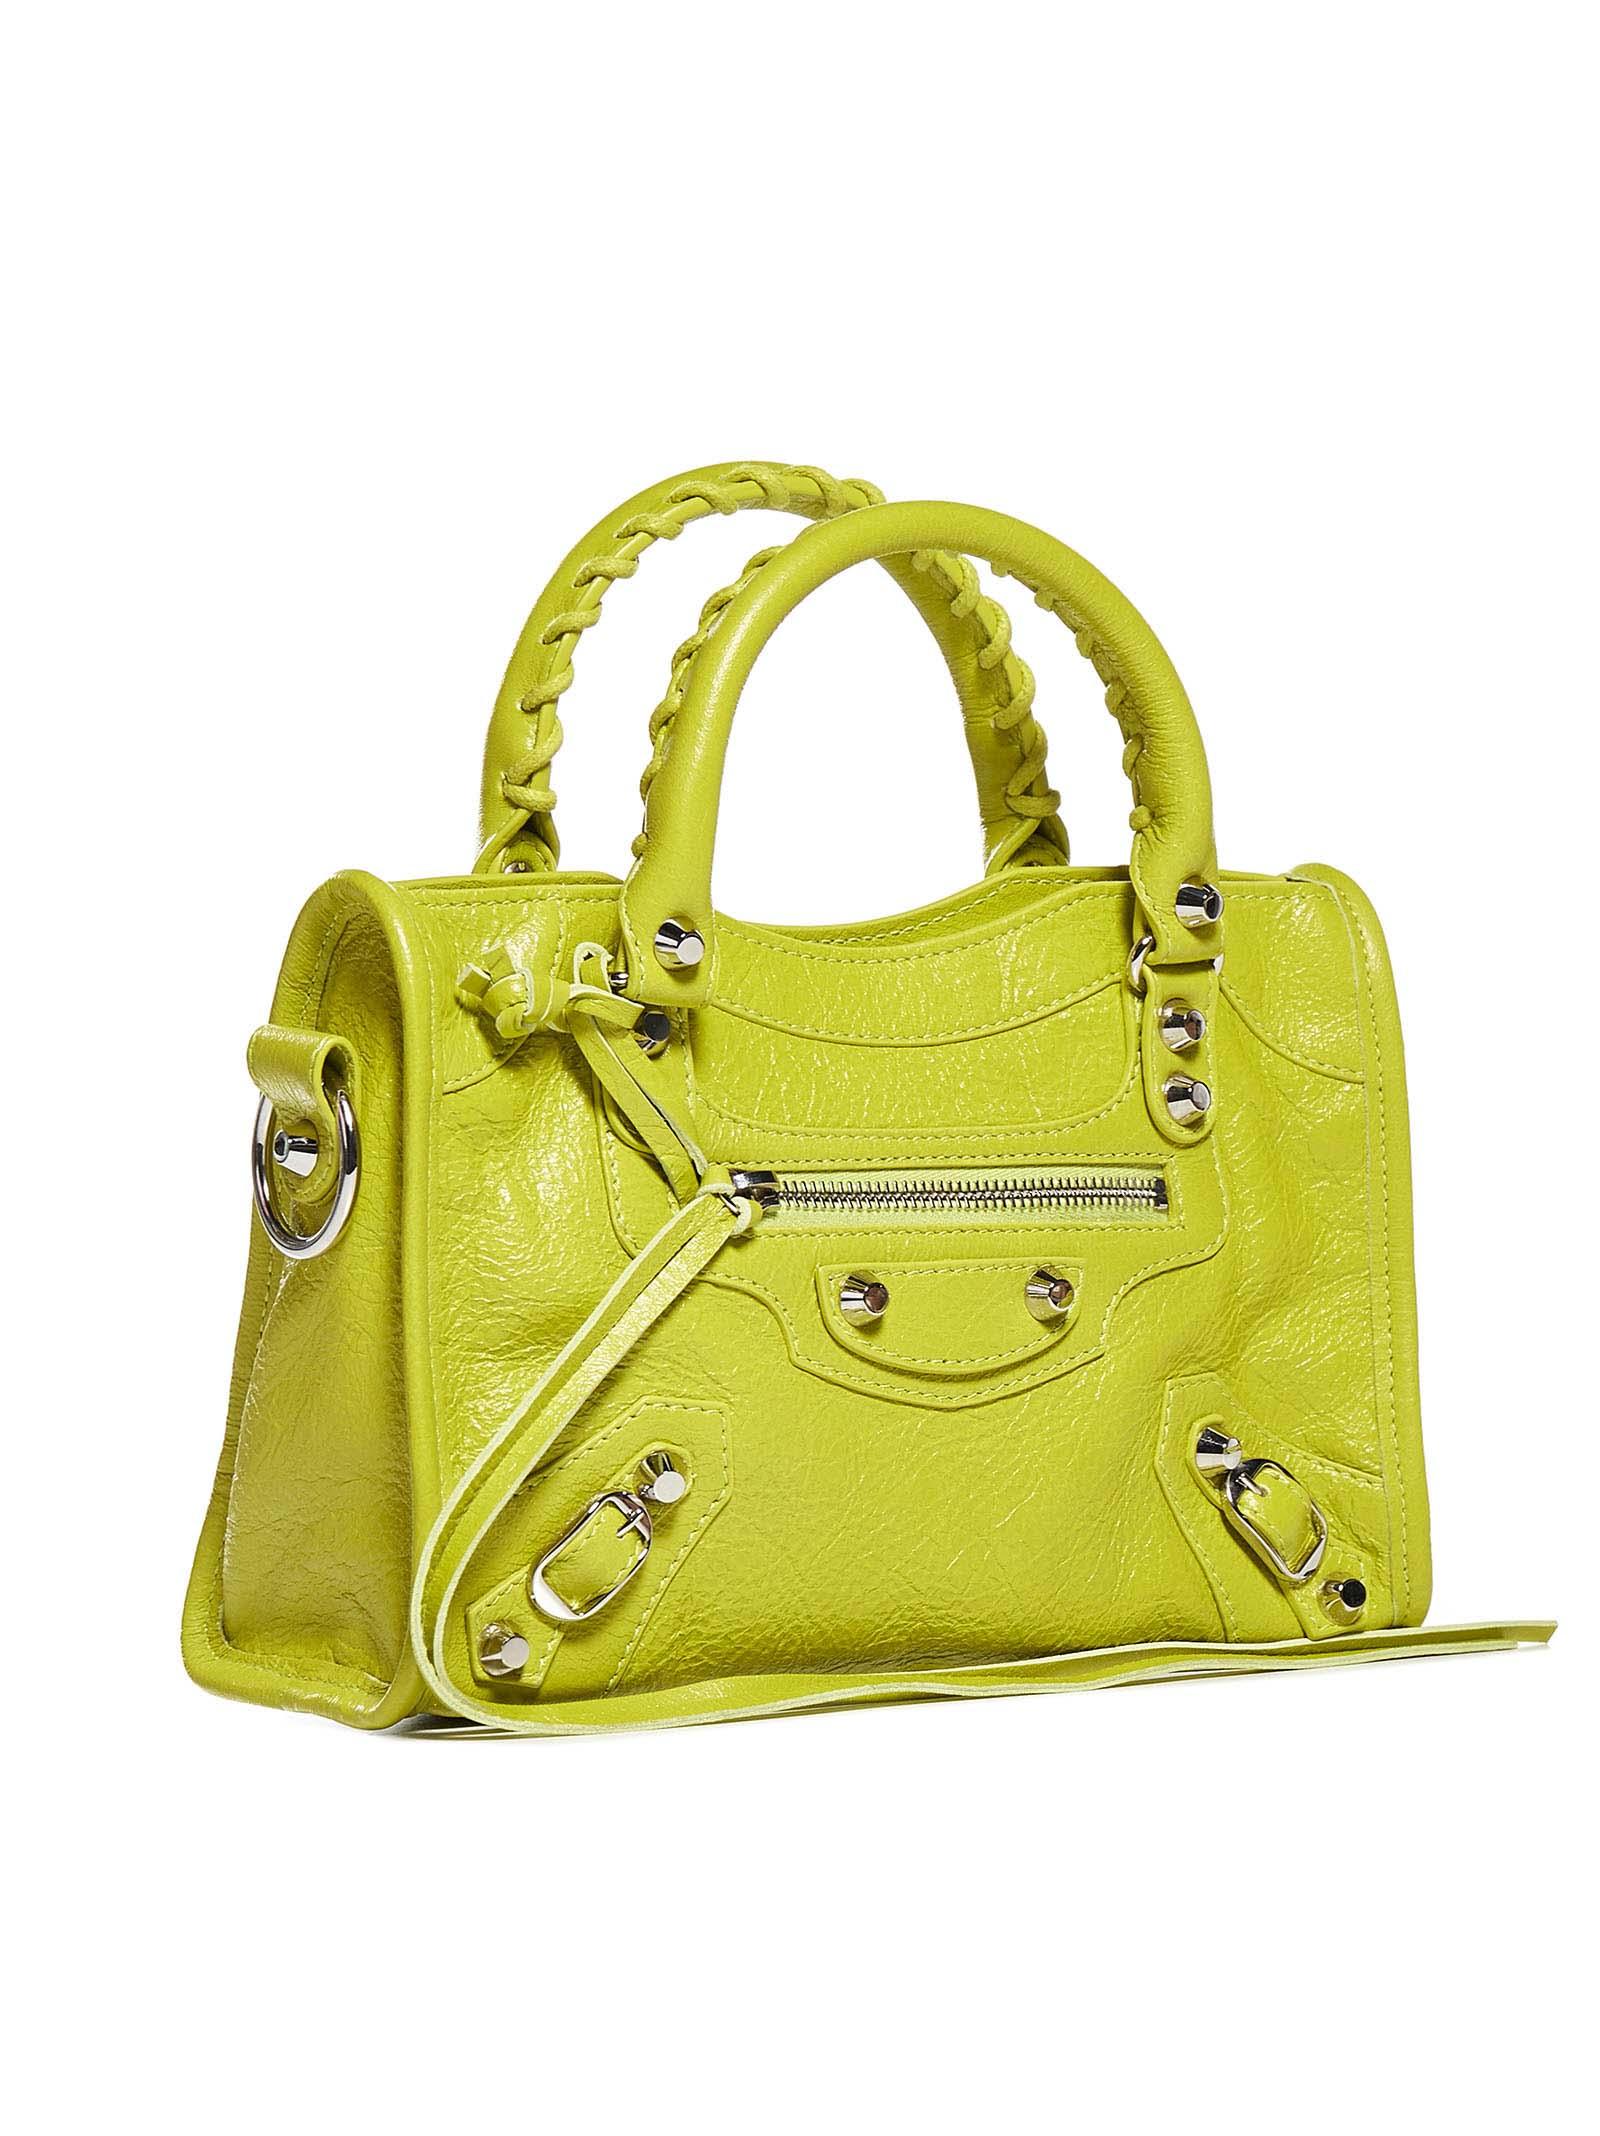 Balenciaga Mini City Leather Bag in Lime - Lyst